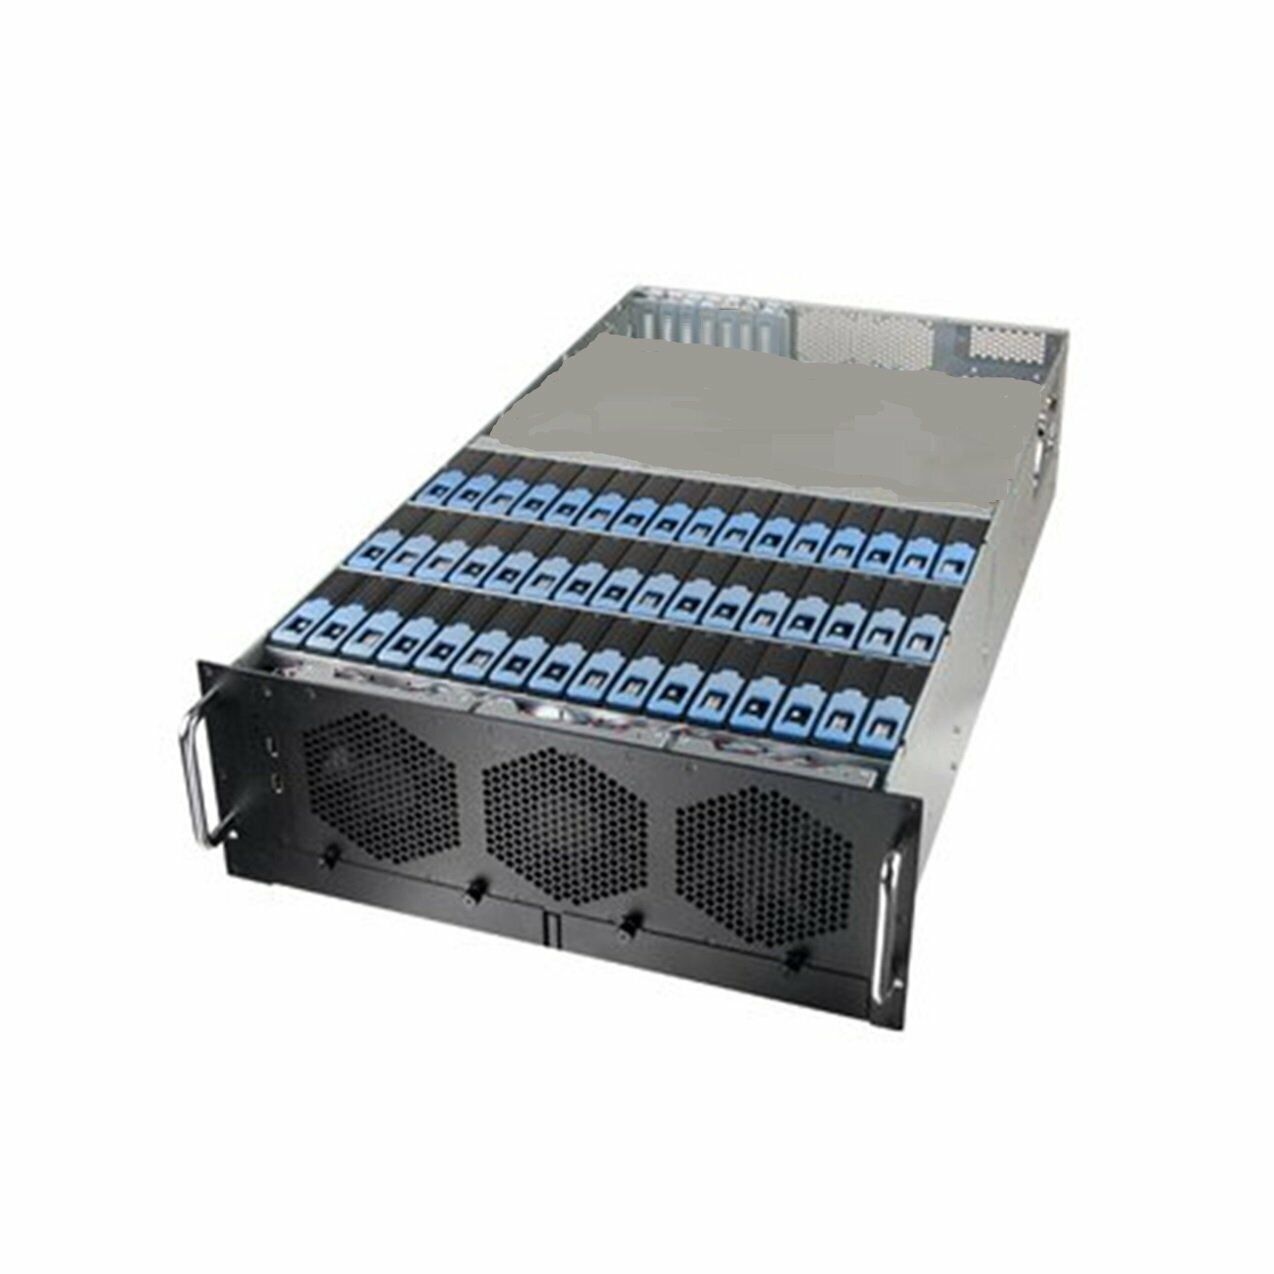 Chenbro NR40700 4U Storinator 48-bay Storage Server Chassis (Disc Array) Chia